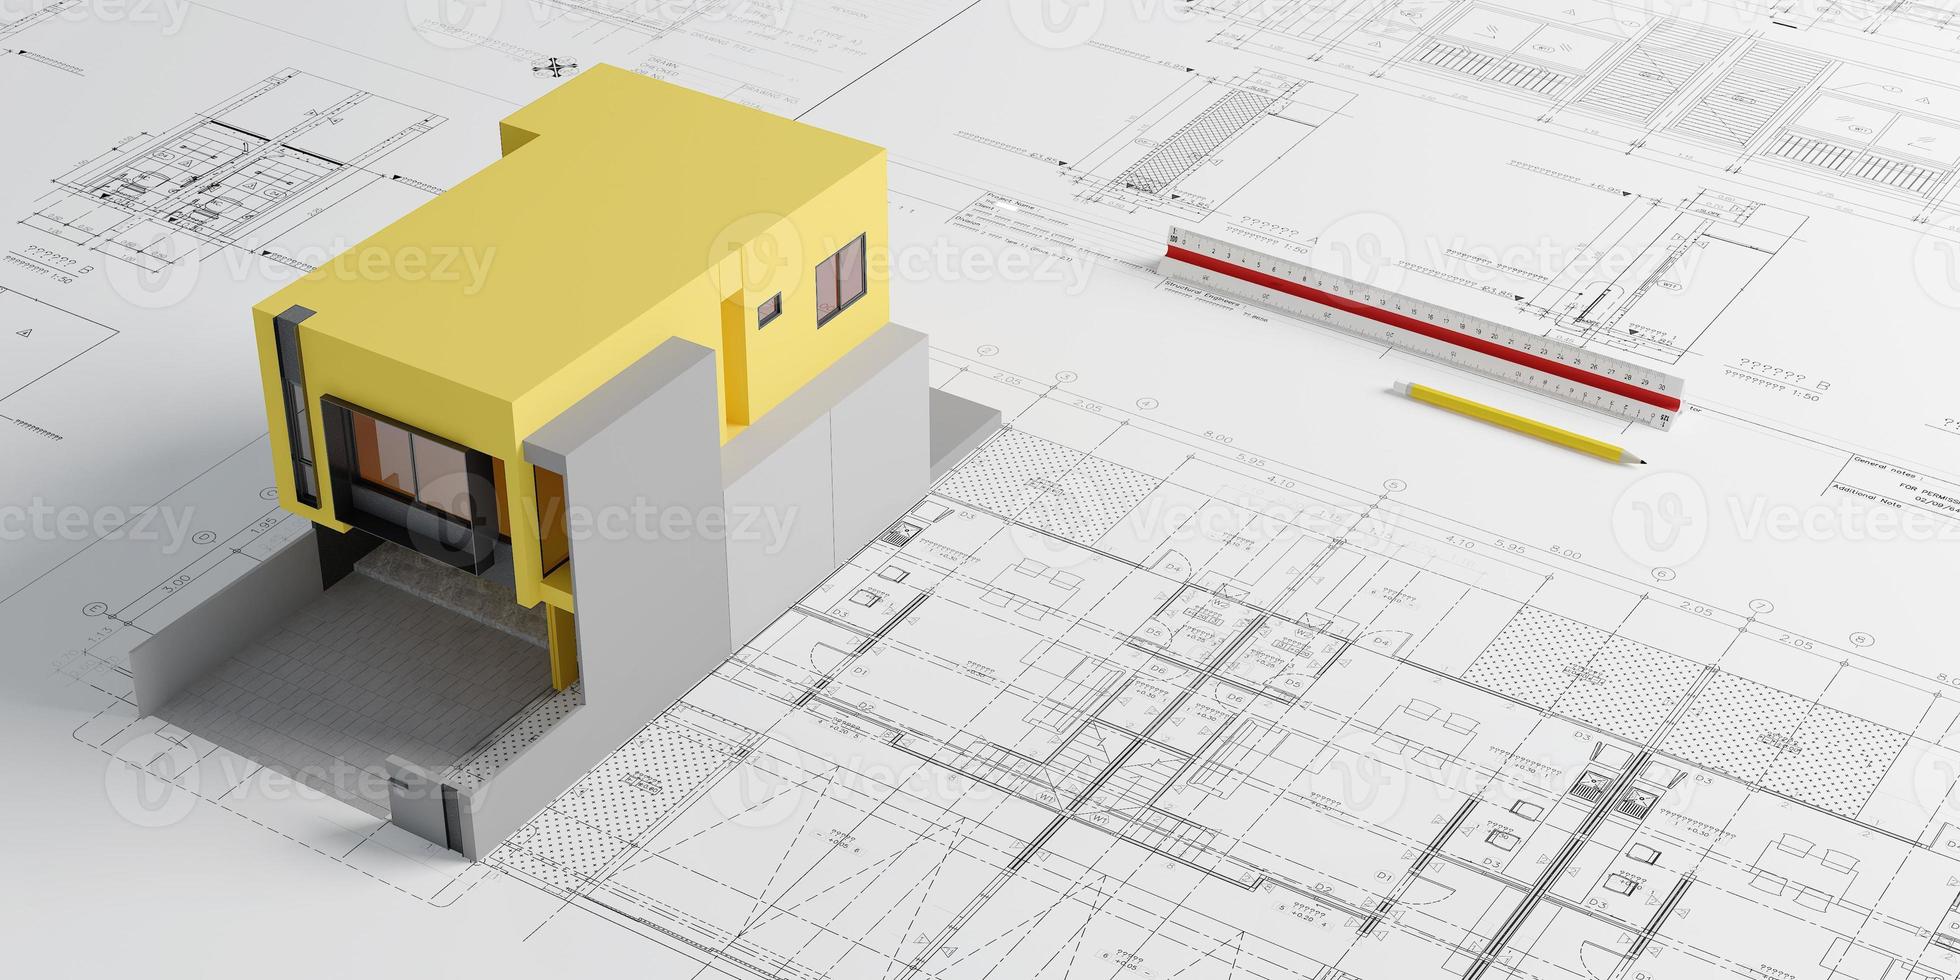 planos de planta e modelo de casa amarela com régua de escala e pencil.architect concept.3d rendering foto